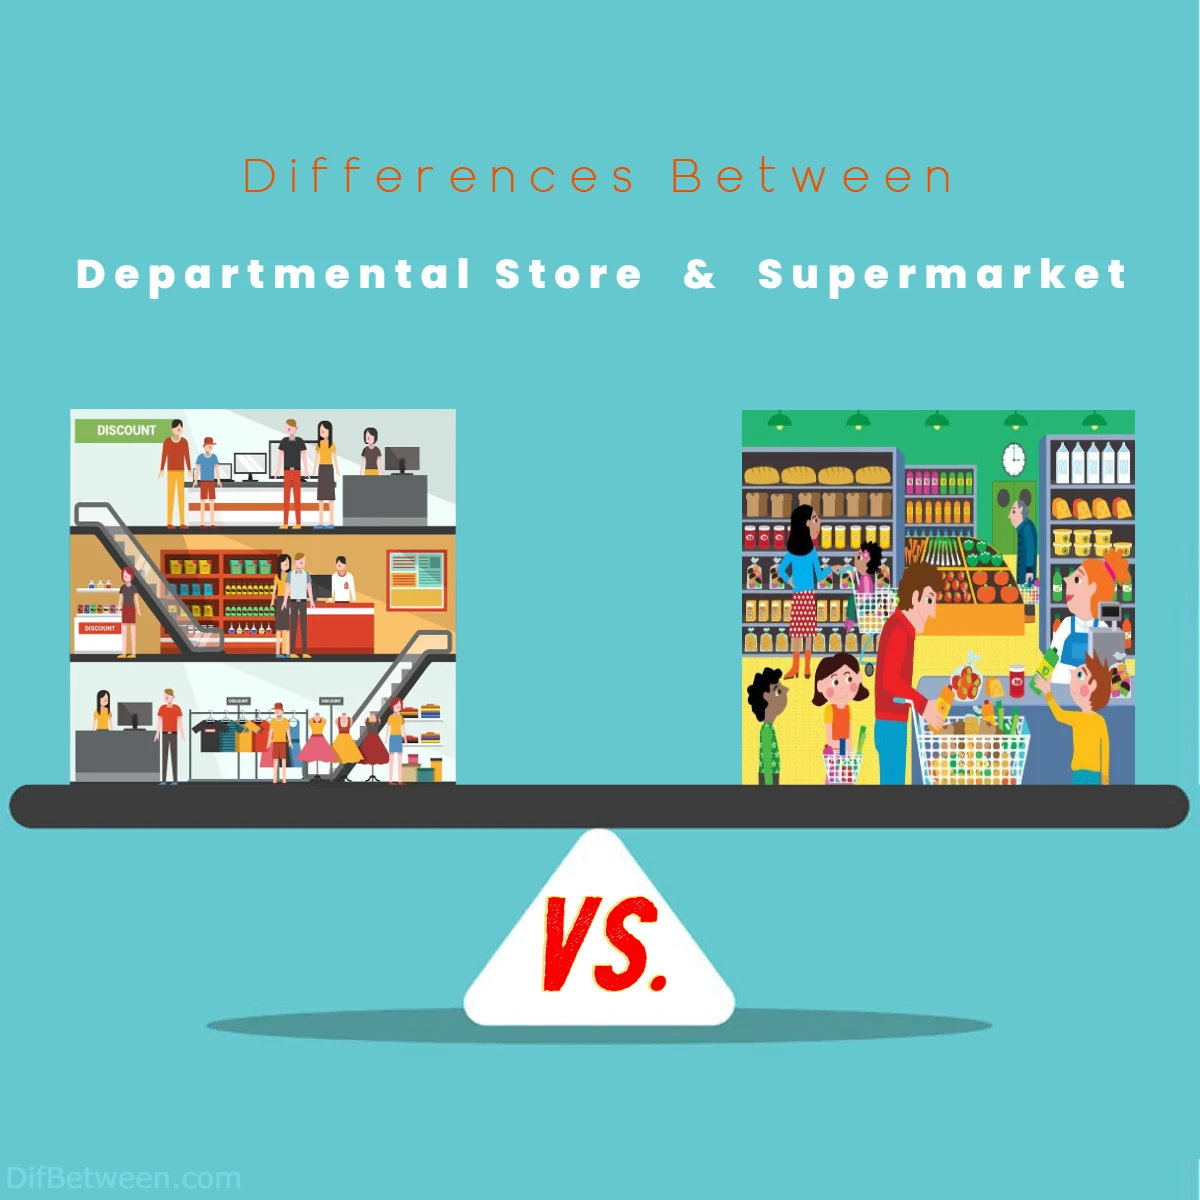 Differences Between Departmental Store vs Supermarket